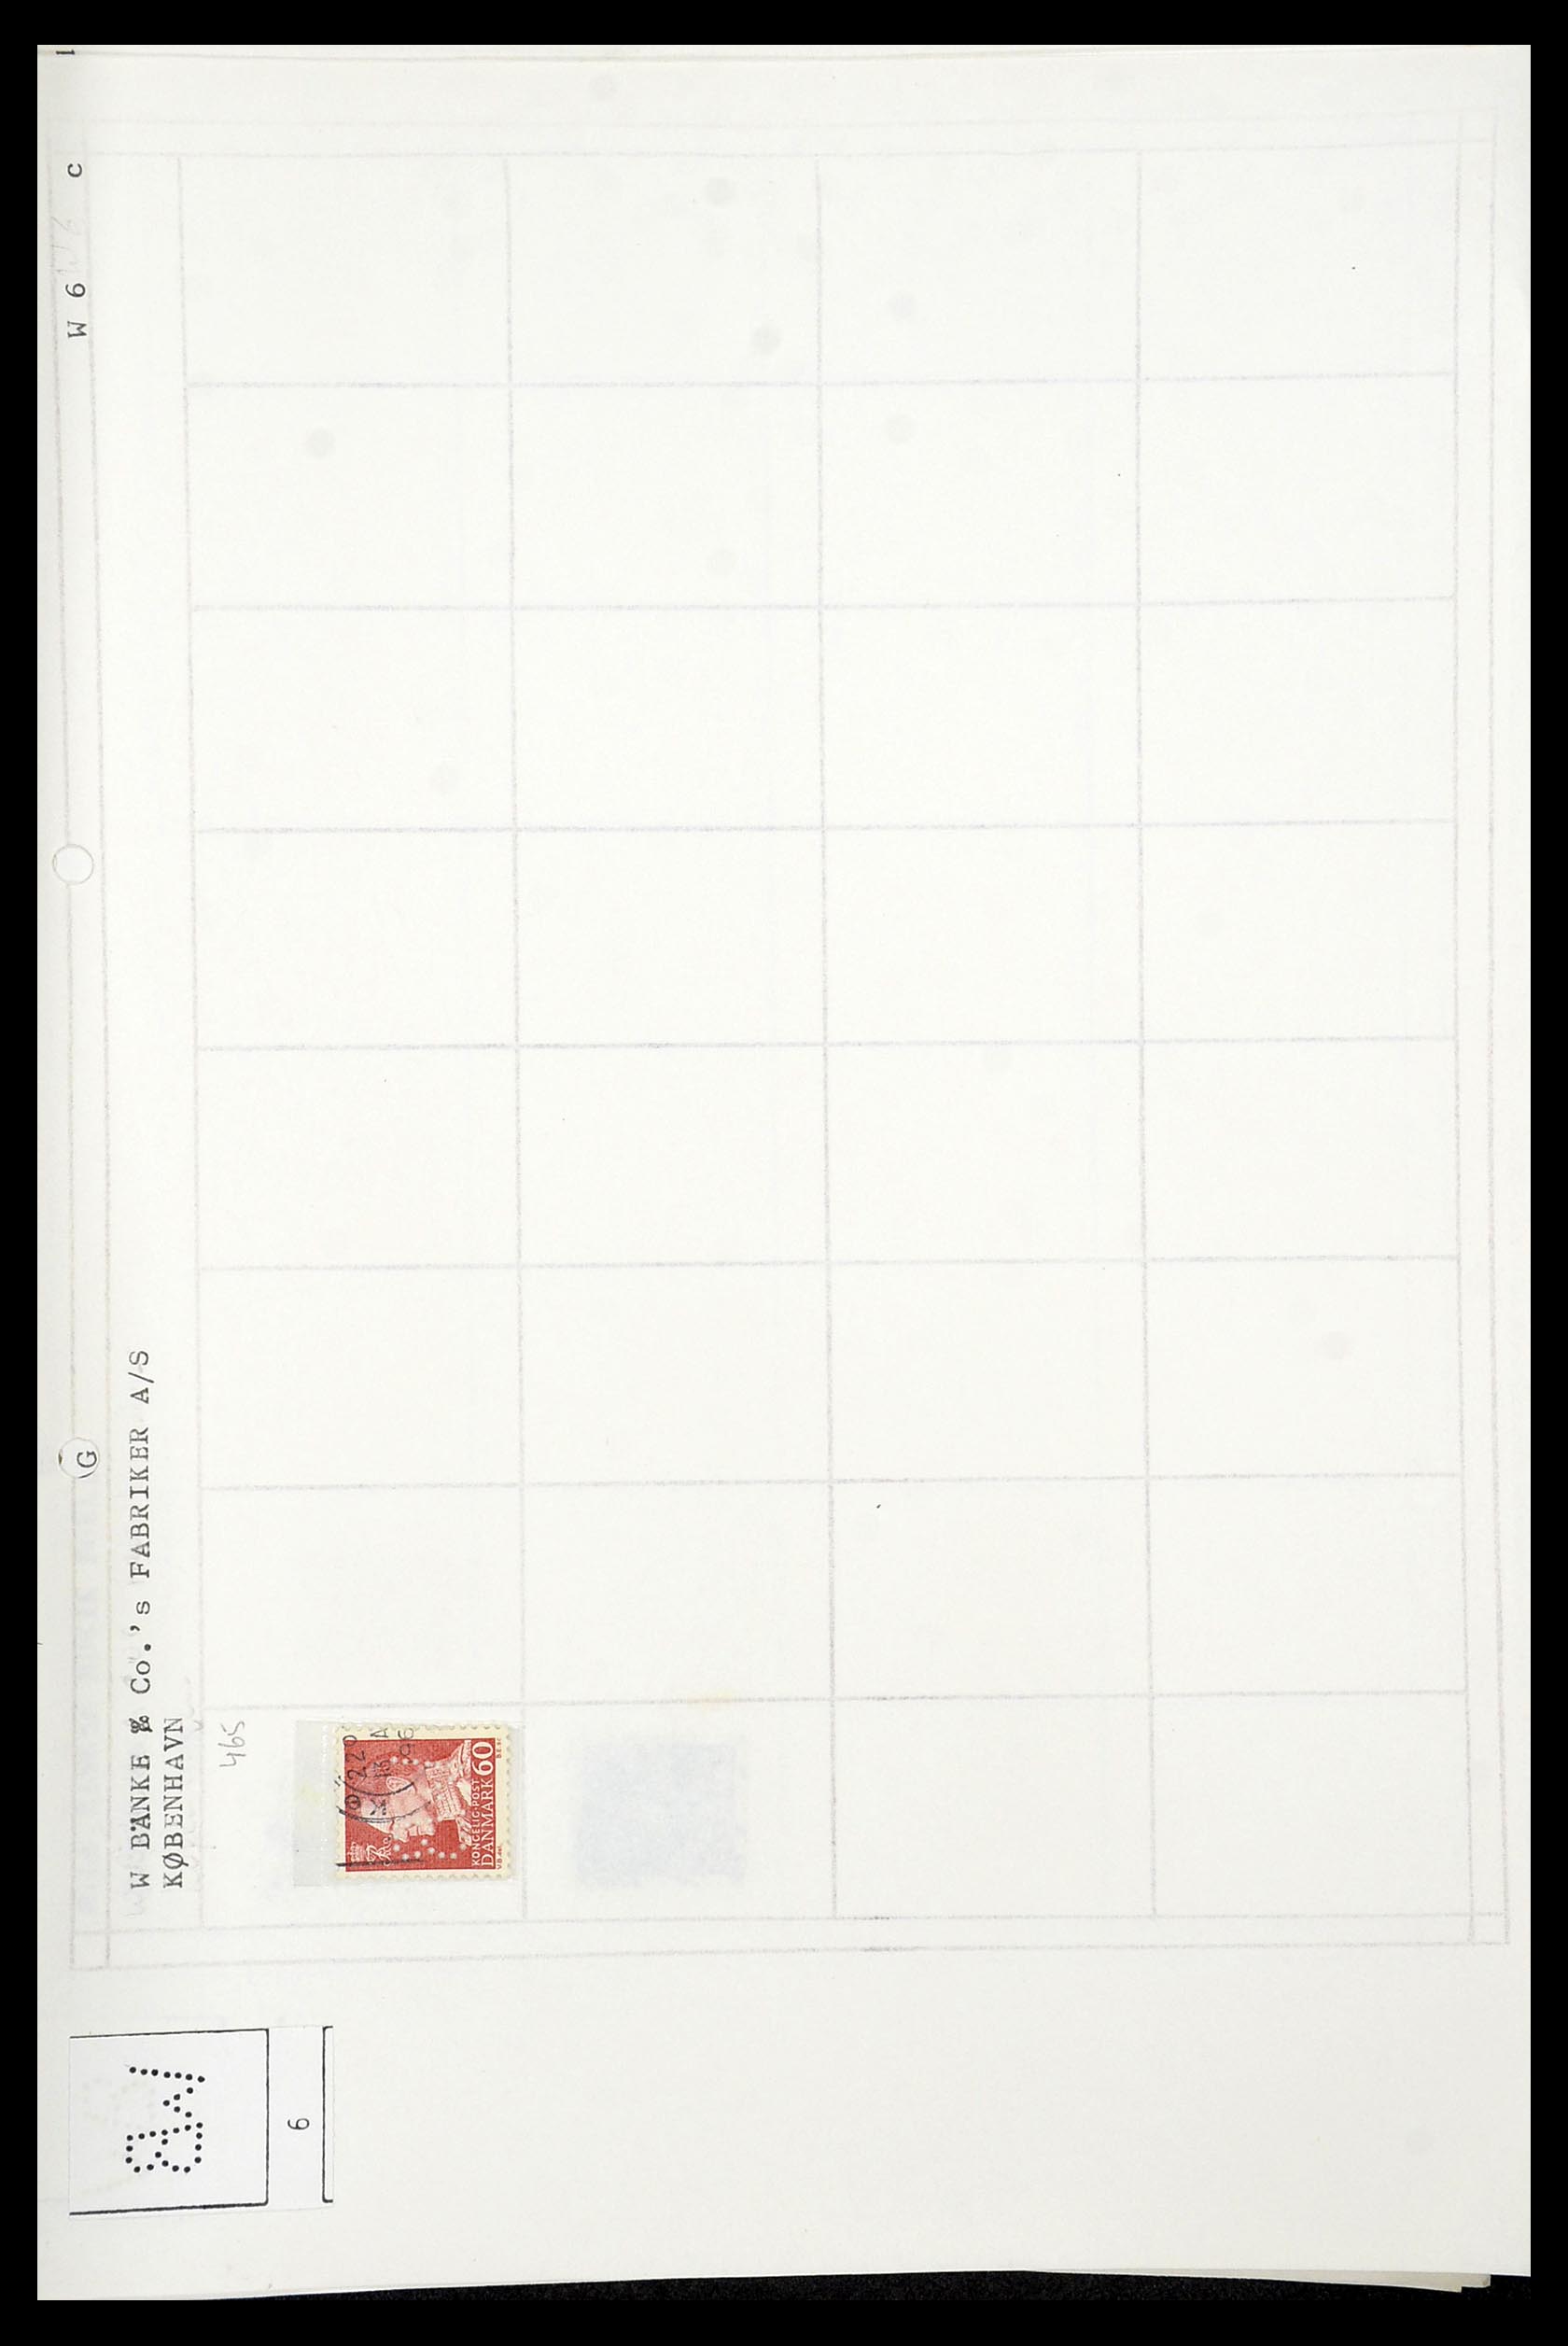 34415 266 - Stamp Collection 34415 Denmark perfins 1875-1980.